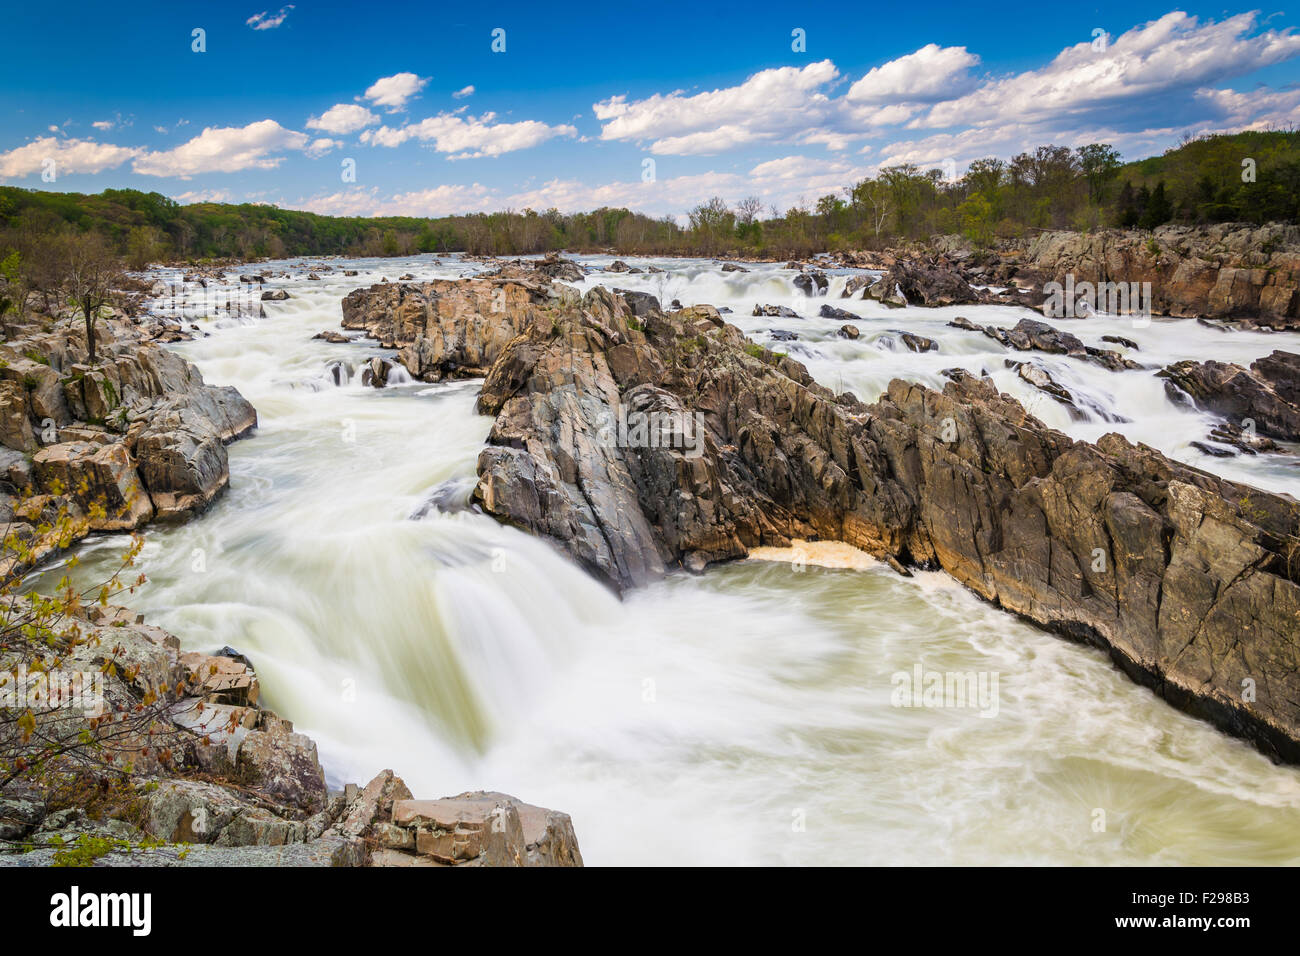 Rapids in the Potomac River at Great Falls Park, Virginia. Stock Photo